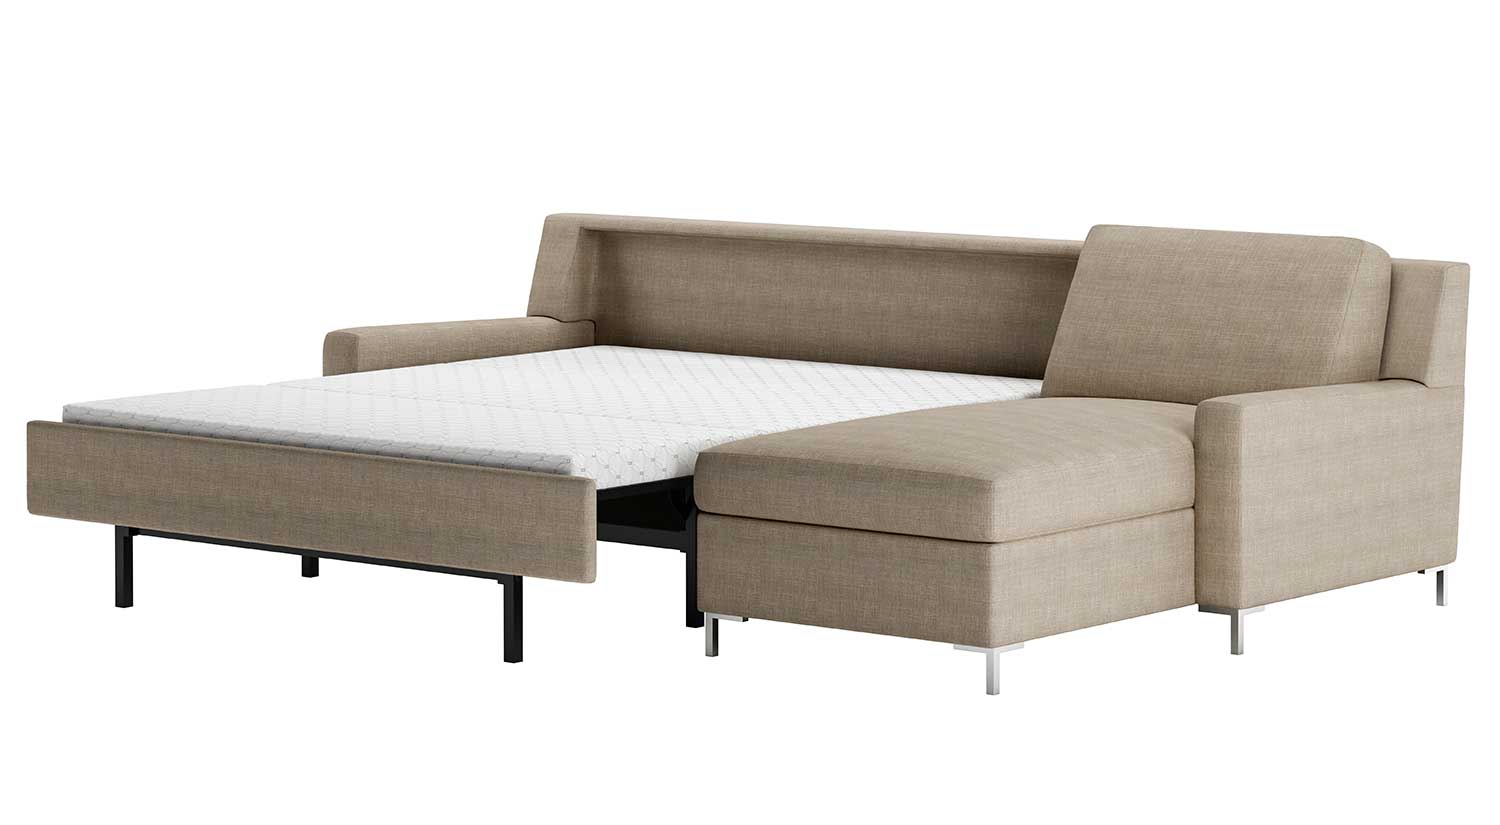 Bryson Comfort Sleeper, American Leather Sofa Bed Mattress Pad